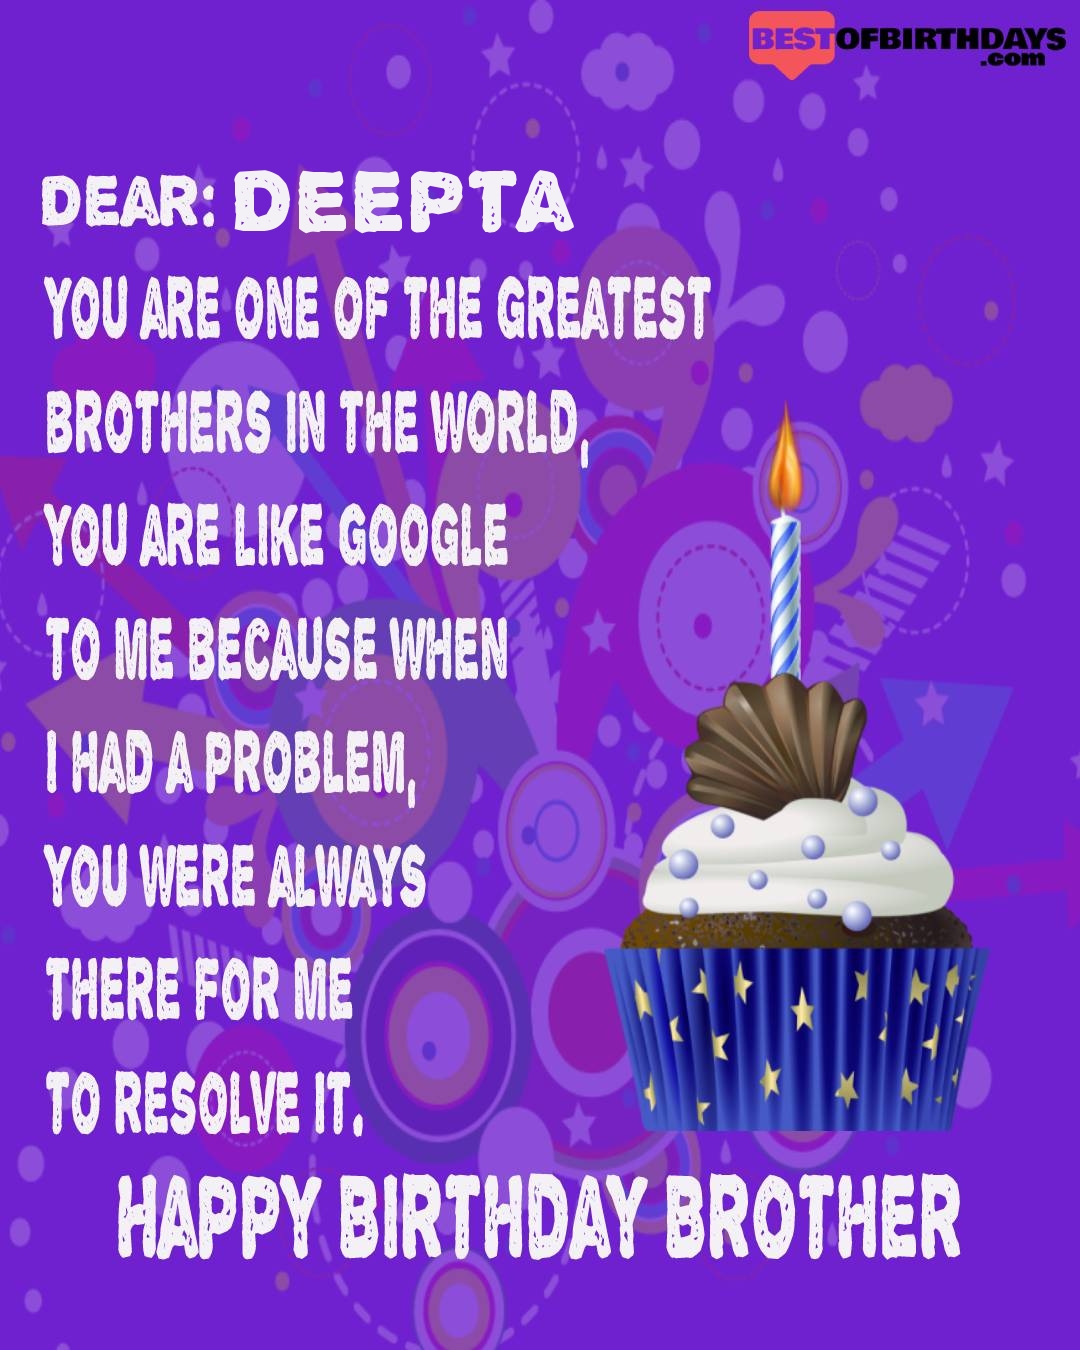 Happy birthday deepta bhai brother bro